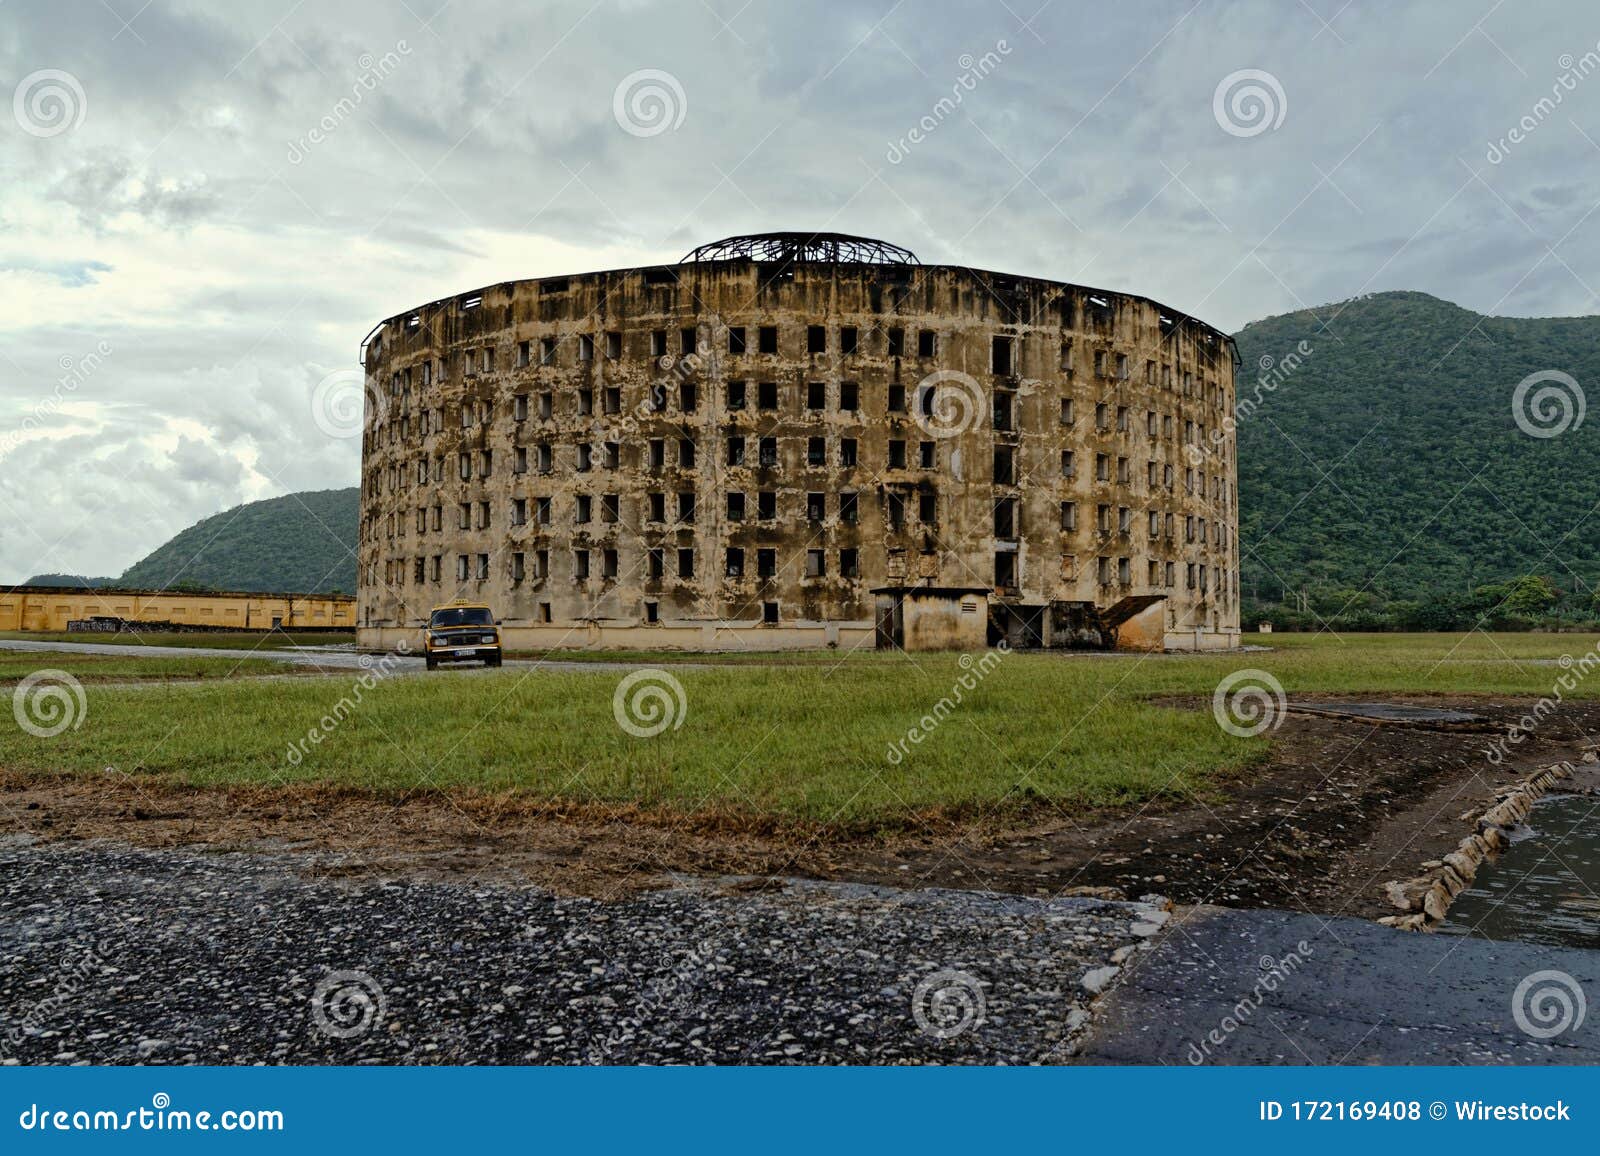 old presidio modelo prison building on the isle of youth, cuba